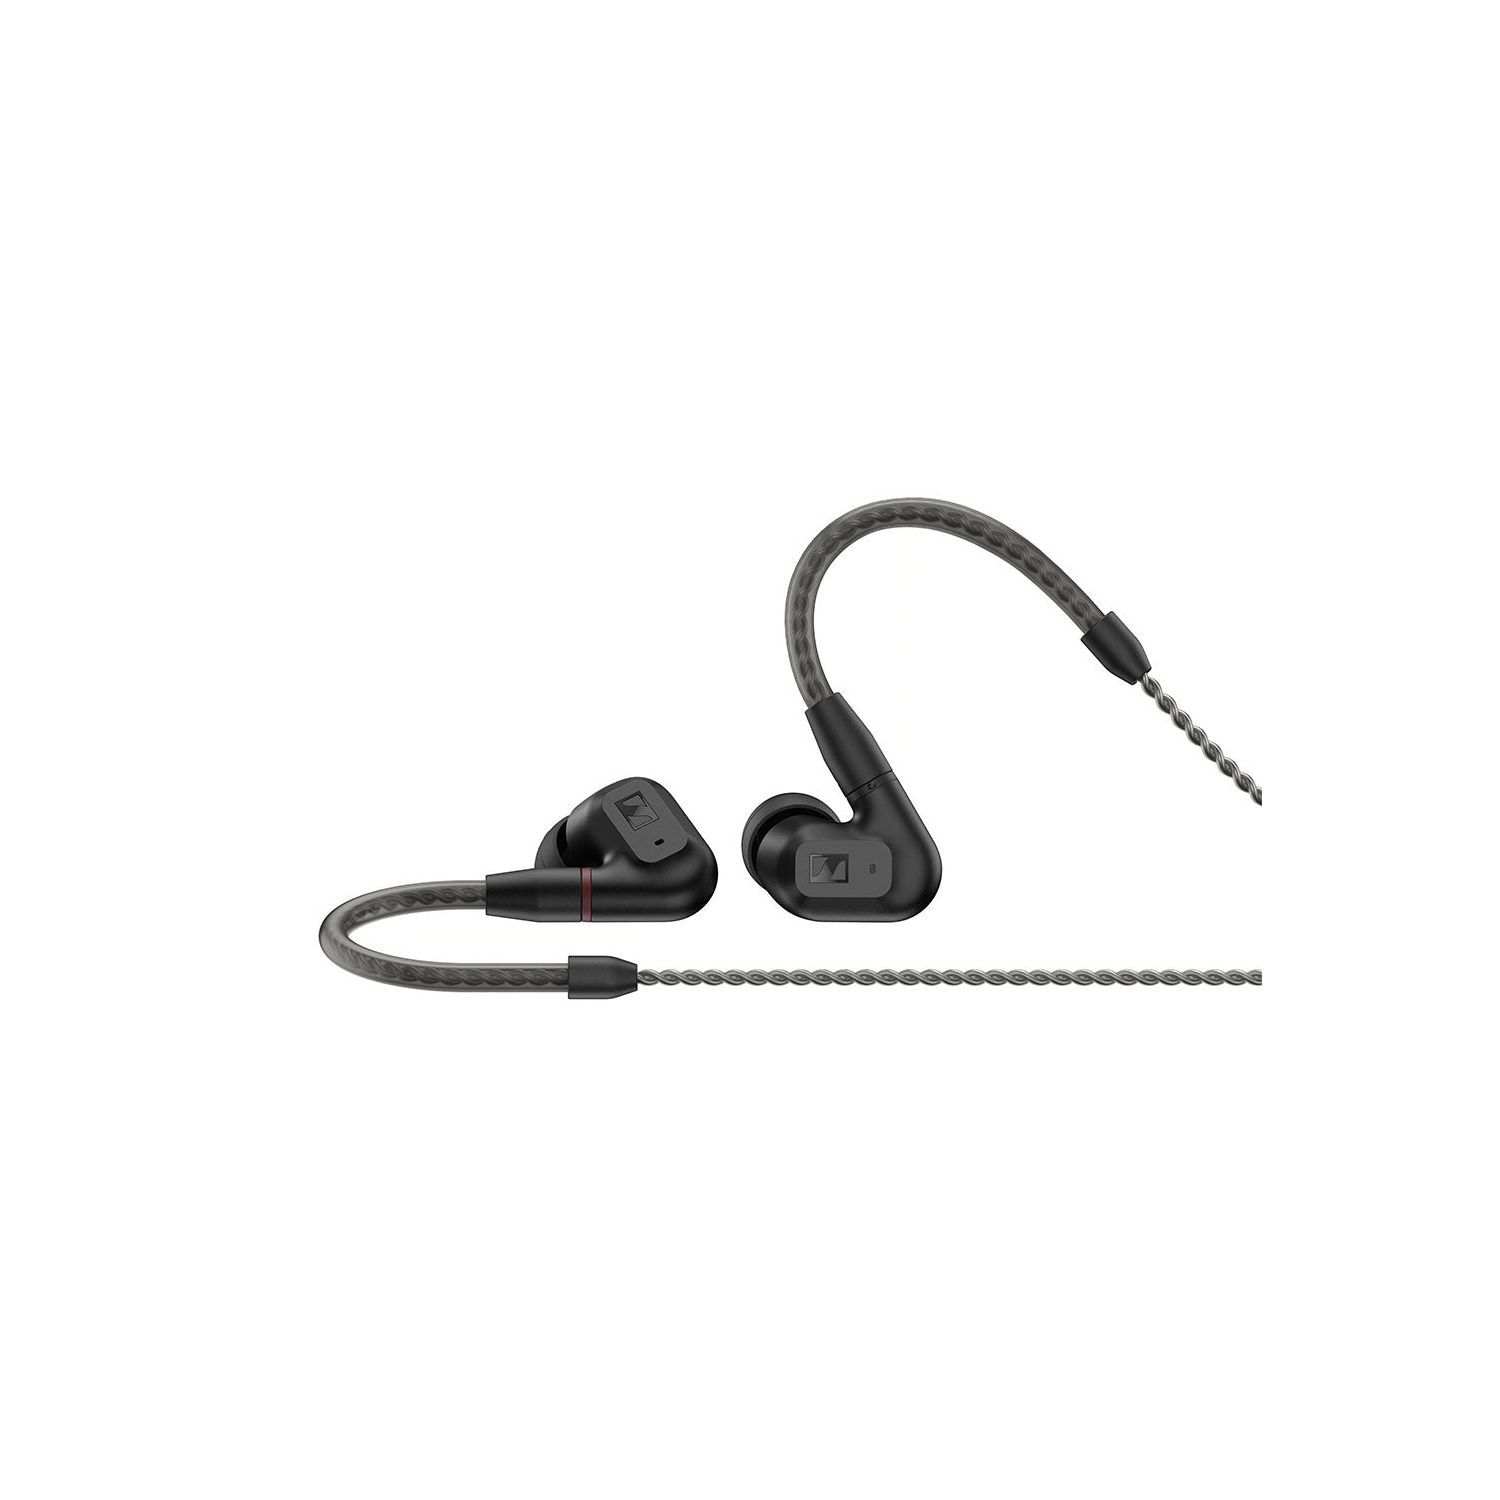 Sennheiser IE 200 in-Ear Audiophile Headphones - Detachable Braided Cable with Flexible Ear Hooks - Certified Refurbished